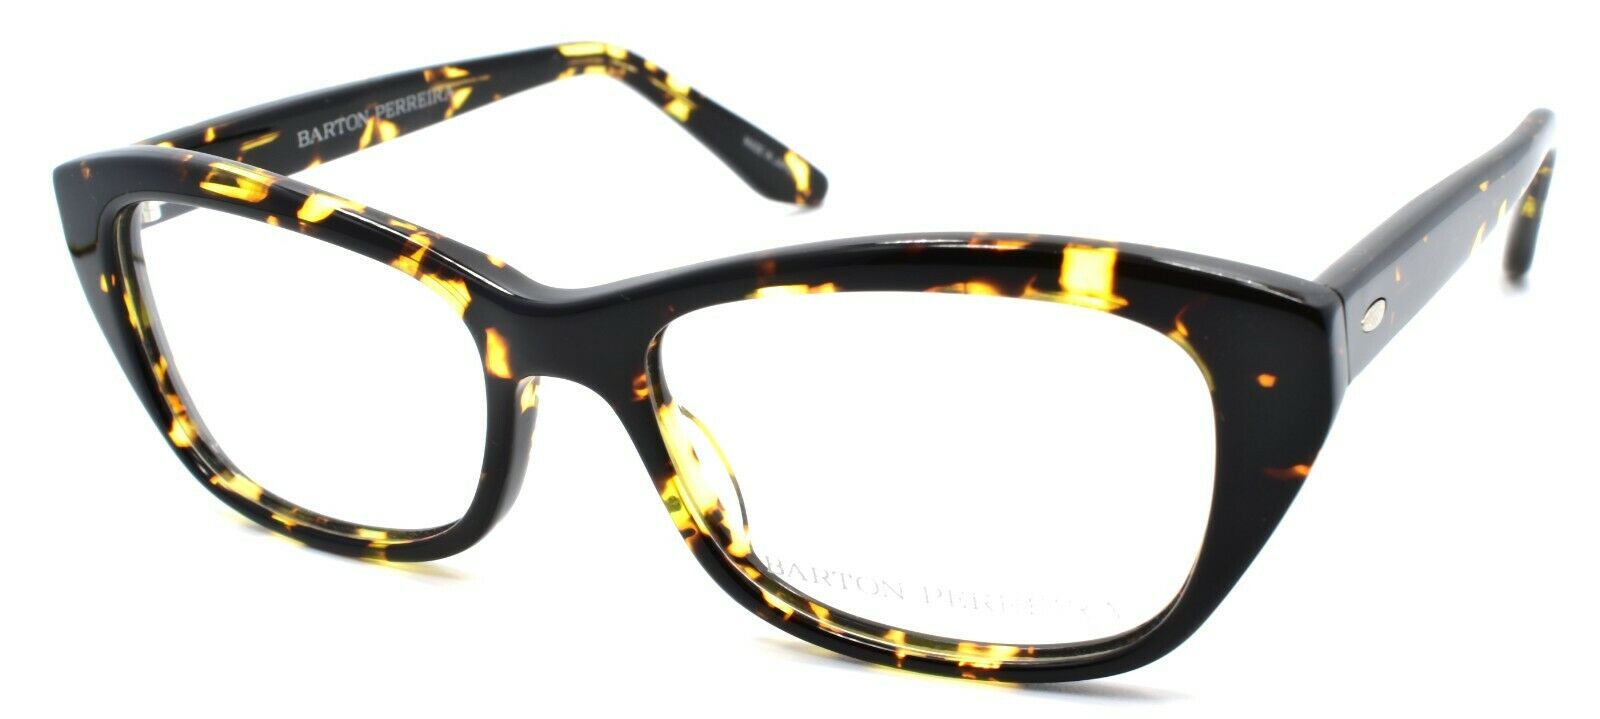 1-Barton Perreira Dreamgirl HEC Women's Glasses Frames 49-17-138 Heroine Chic-672263038092-IKSpecs